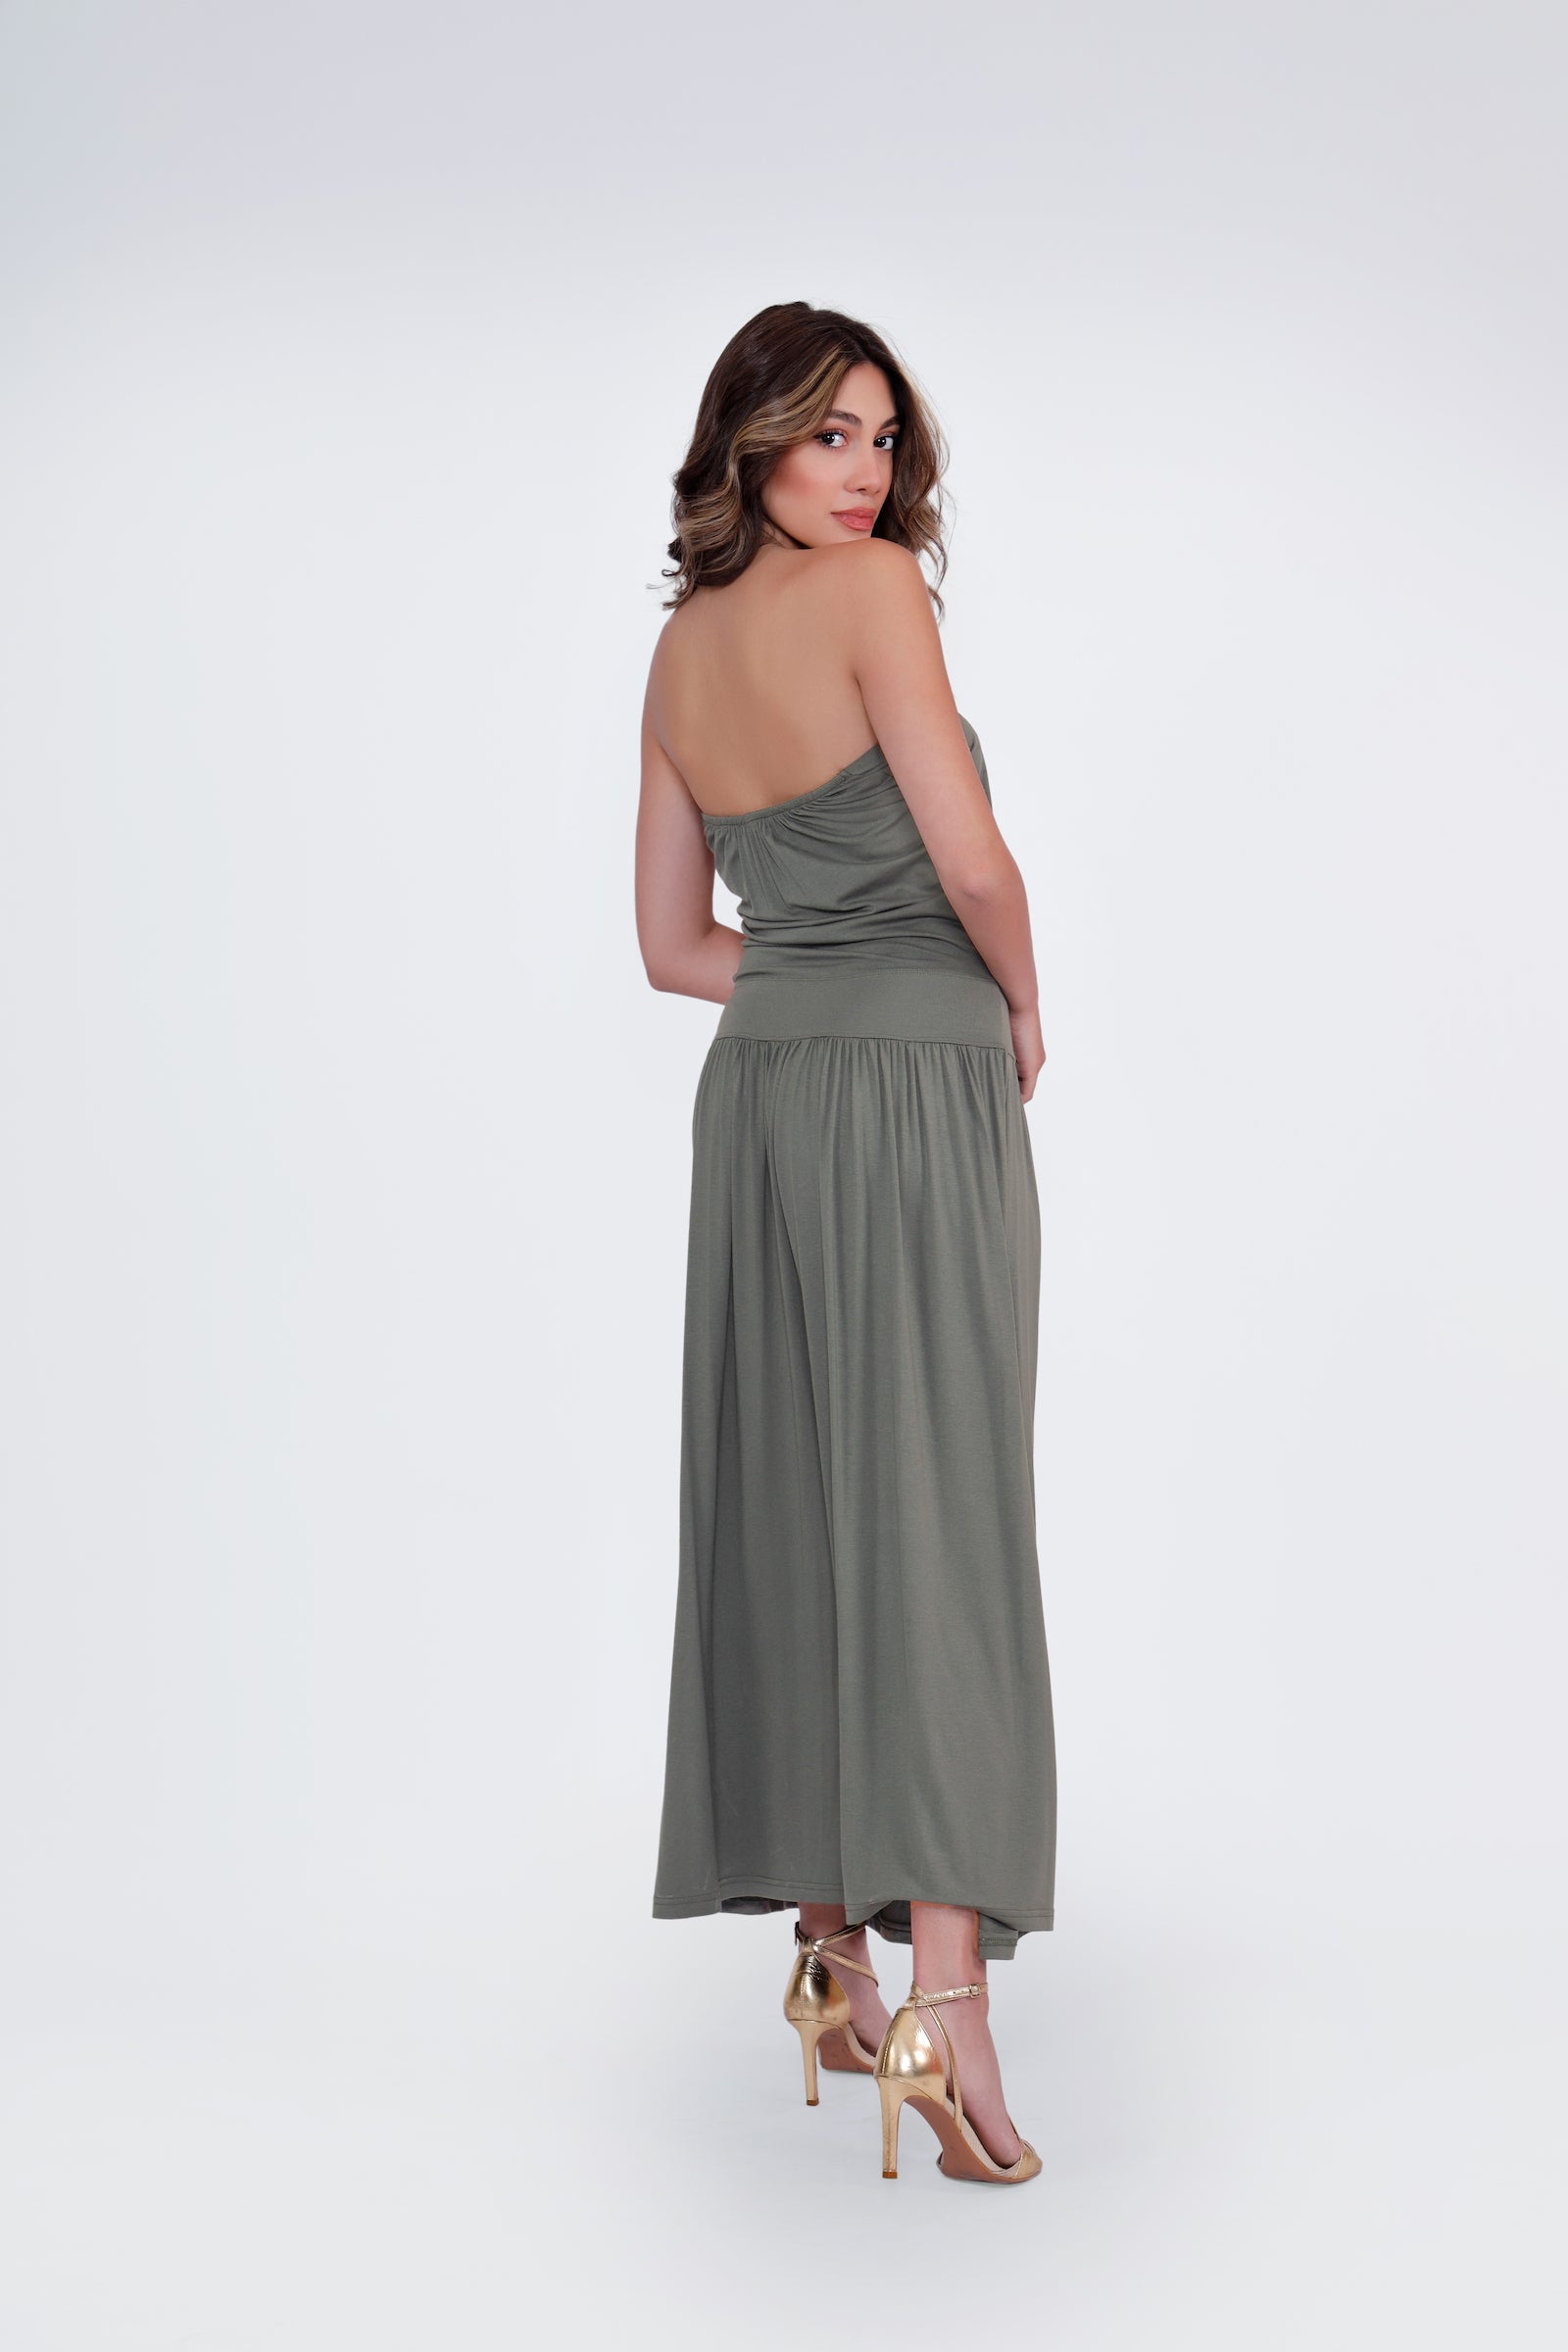 Alicia Strapless Dress - Olive Green